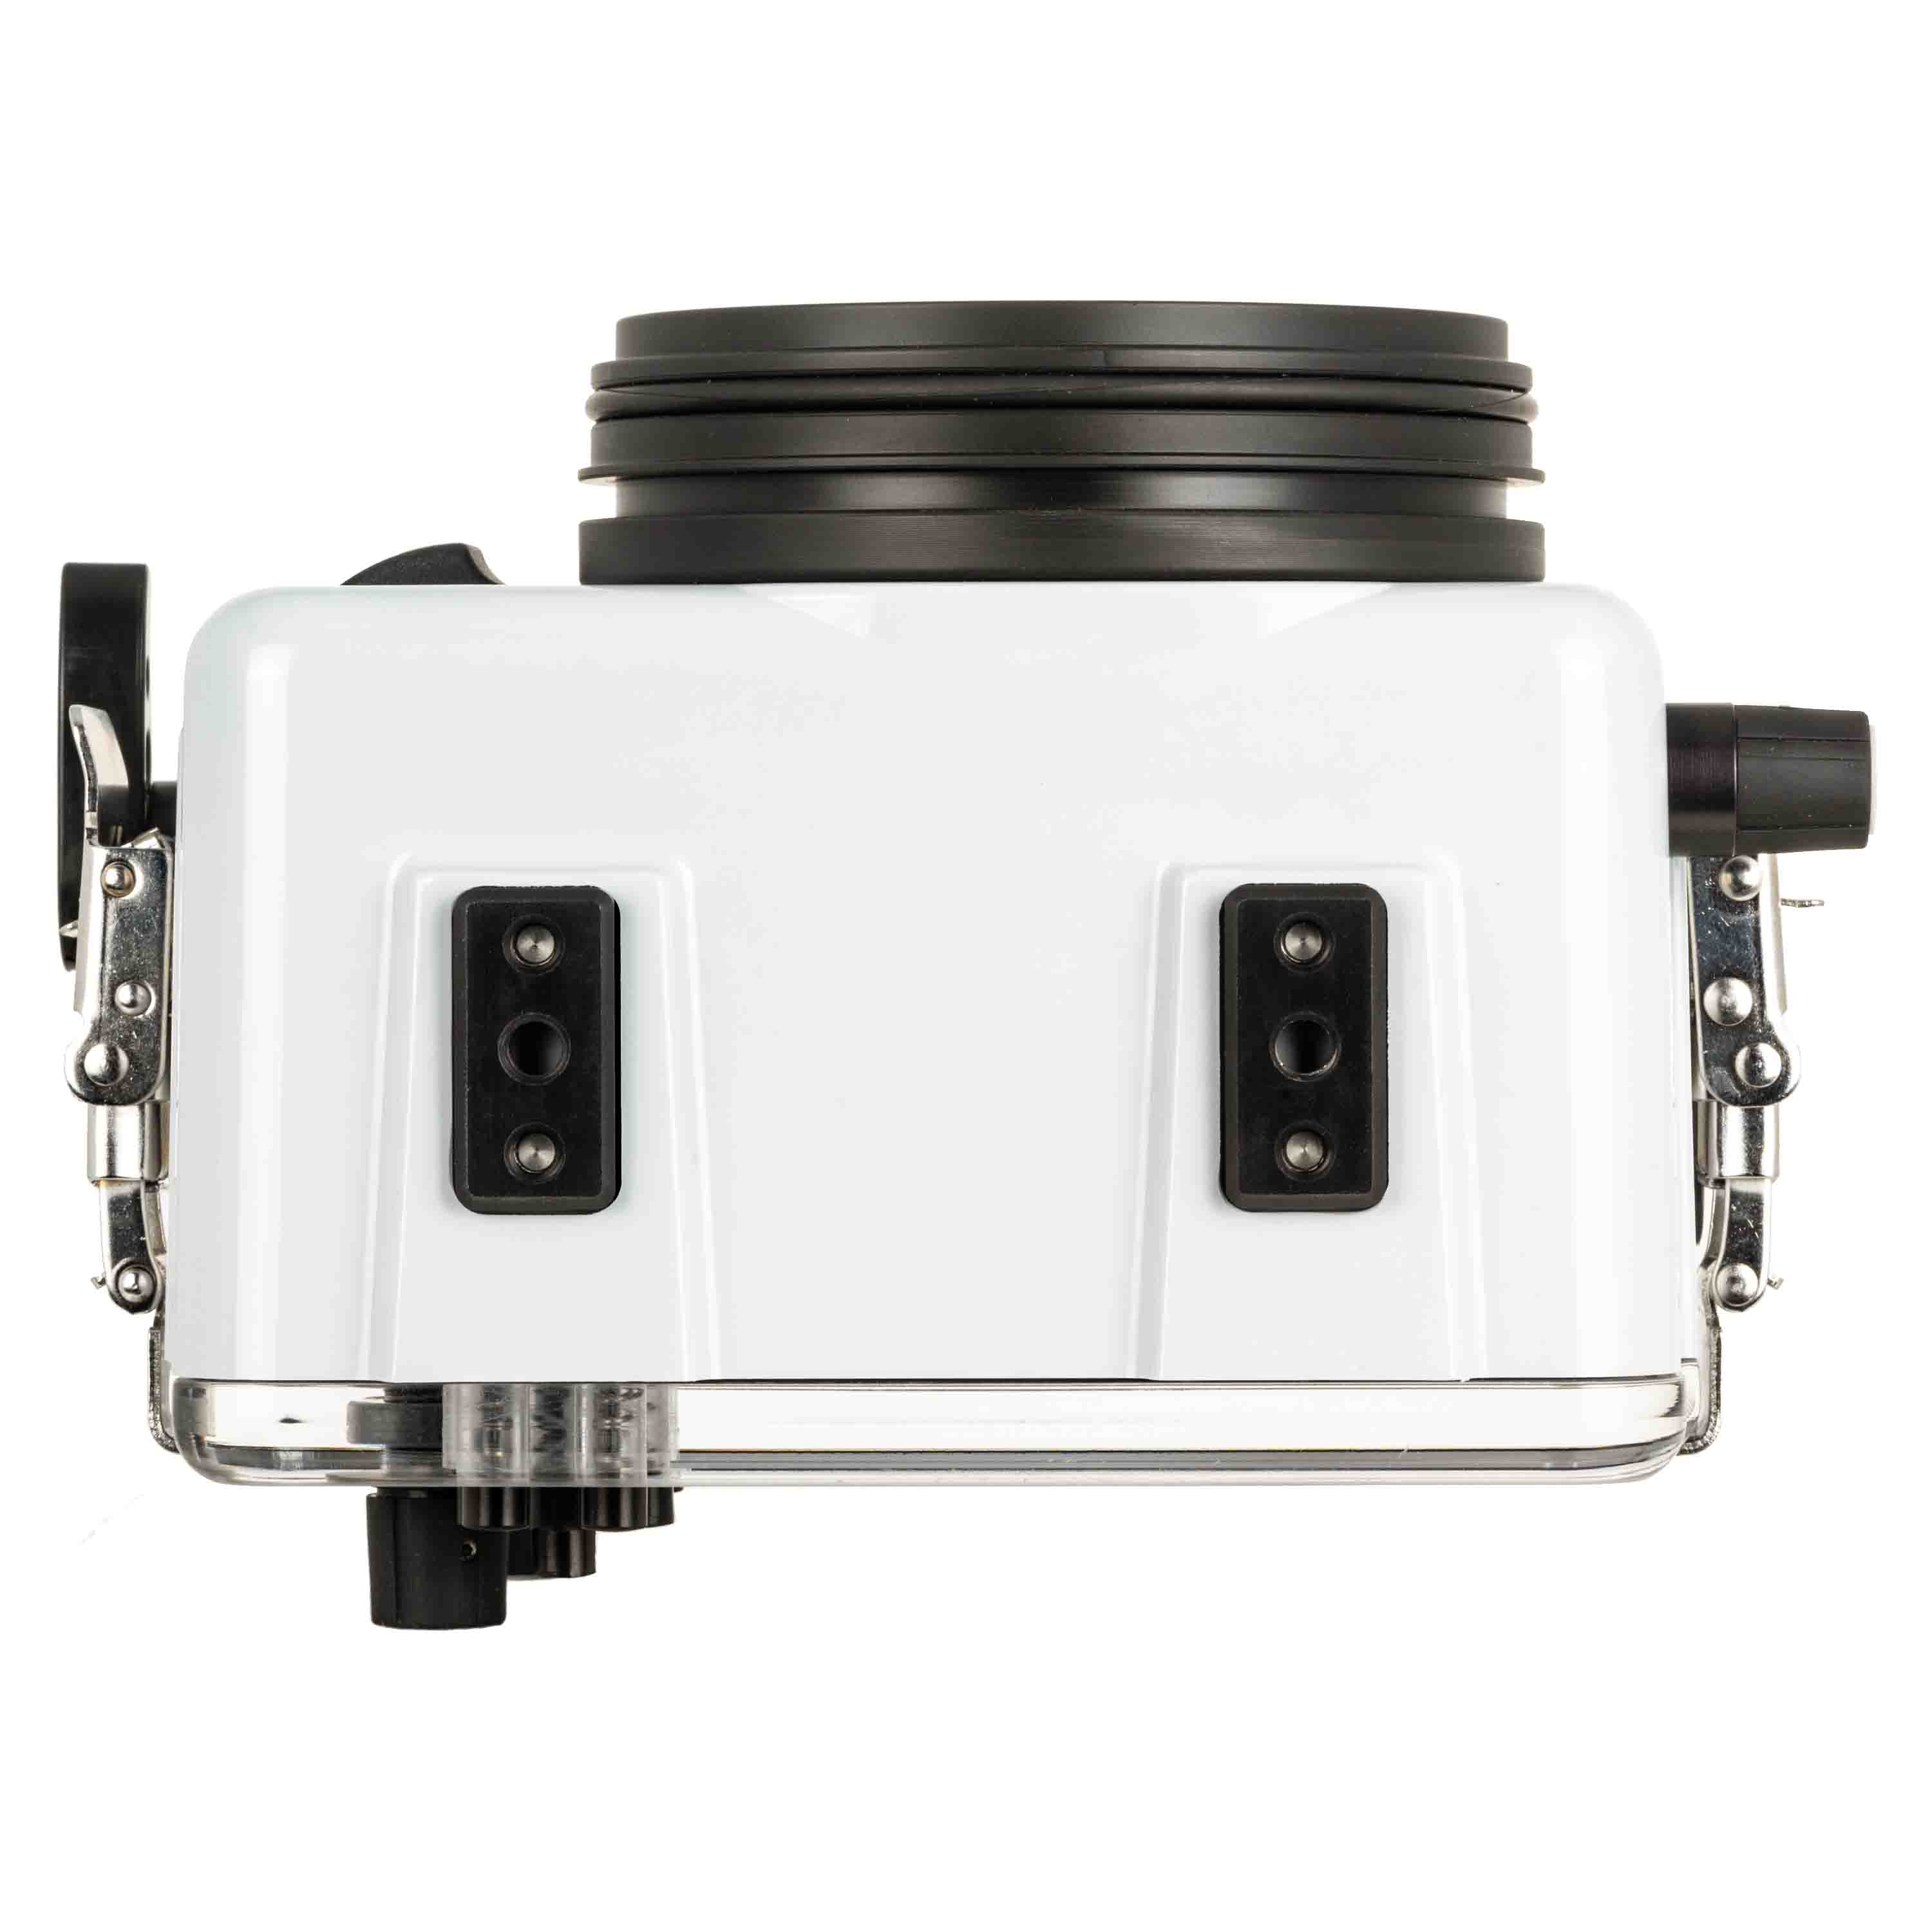 Ikelite 200DLM/A Underwater Housing for Sony ZV-E1 Mirrorless Cameras